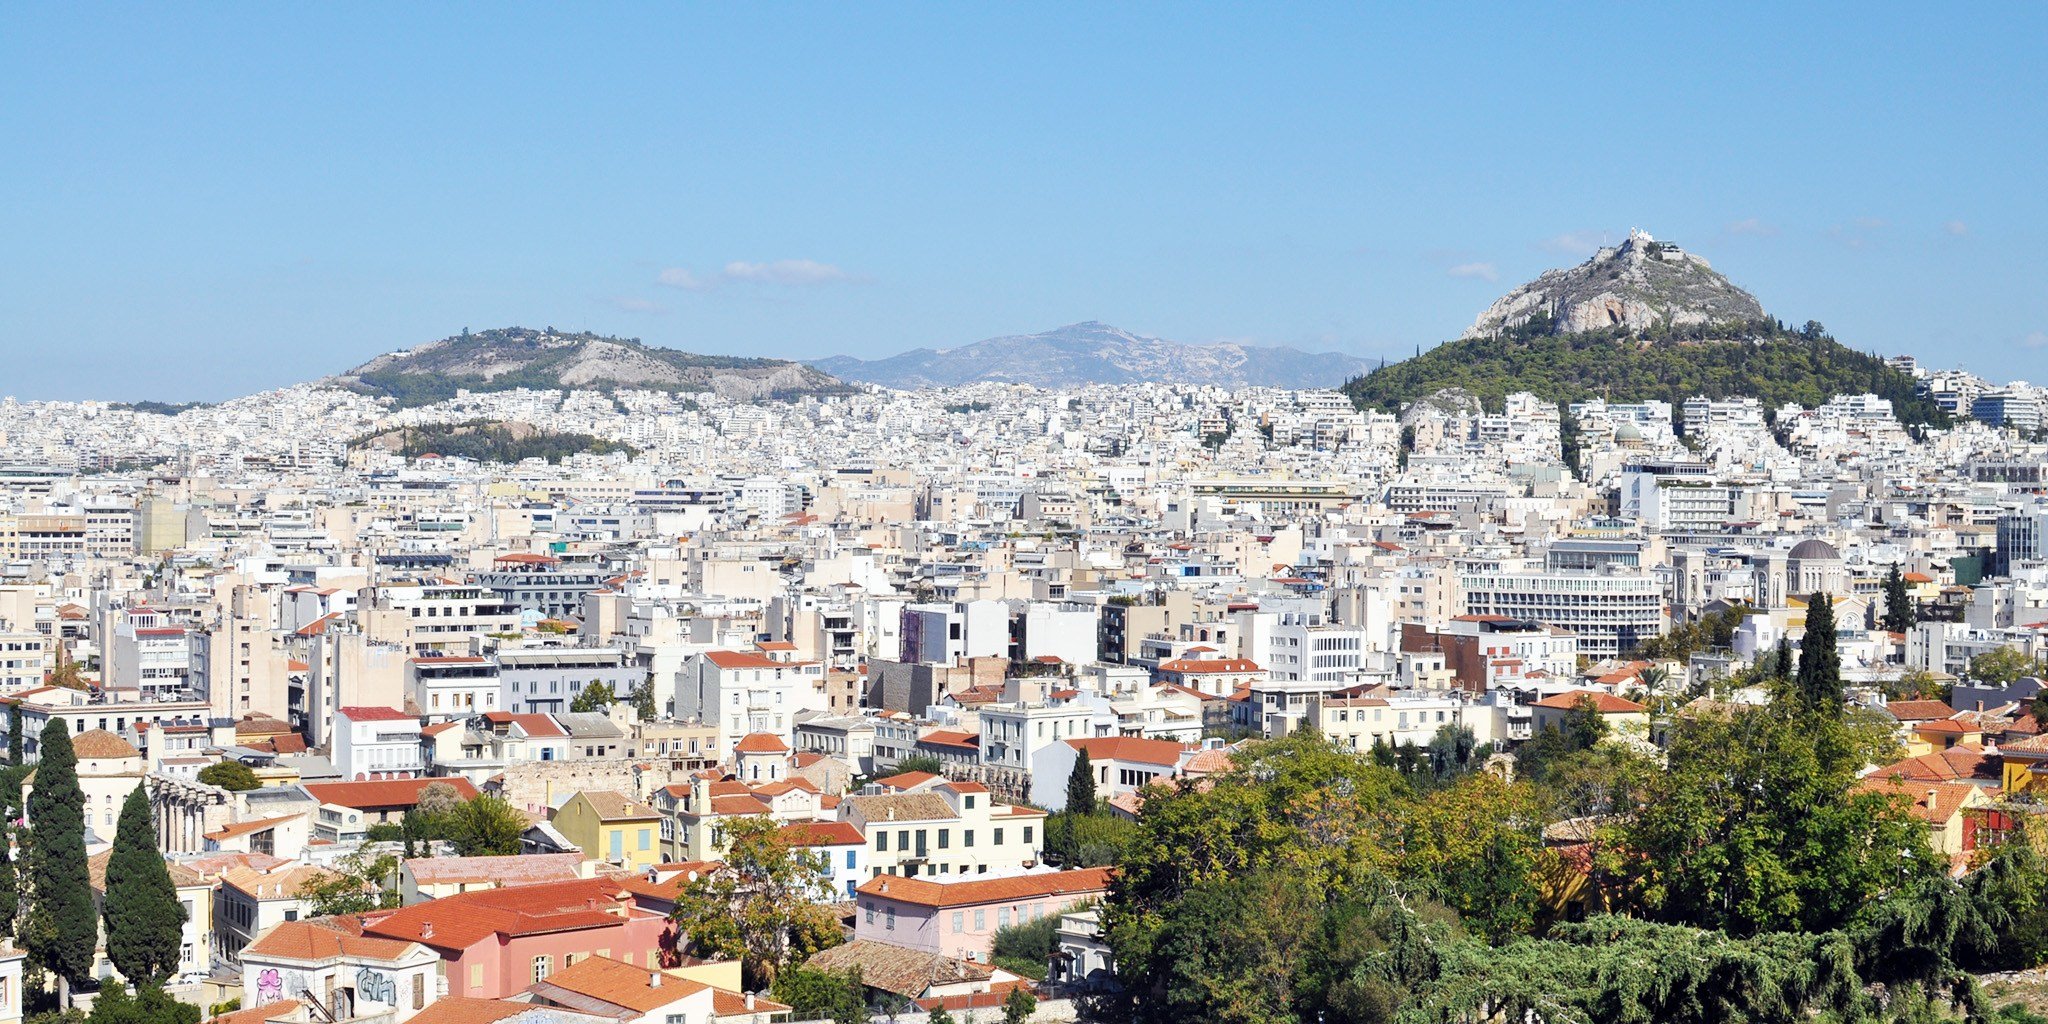 More information about "ΕΤΑΔ: Προς αξιοποίηση τα "Ξενία" και διαμερίσματα για Airbnb"